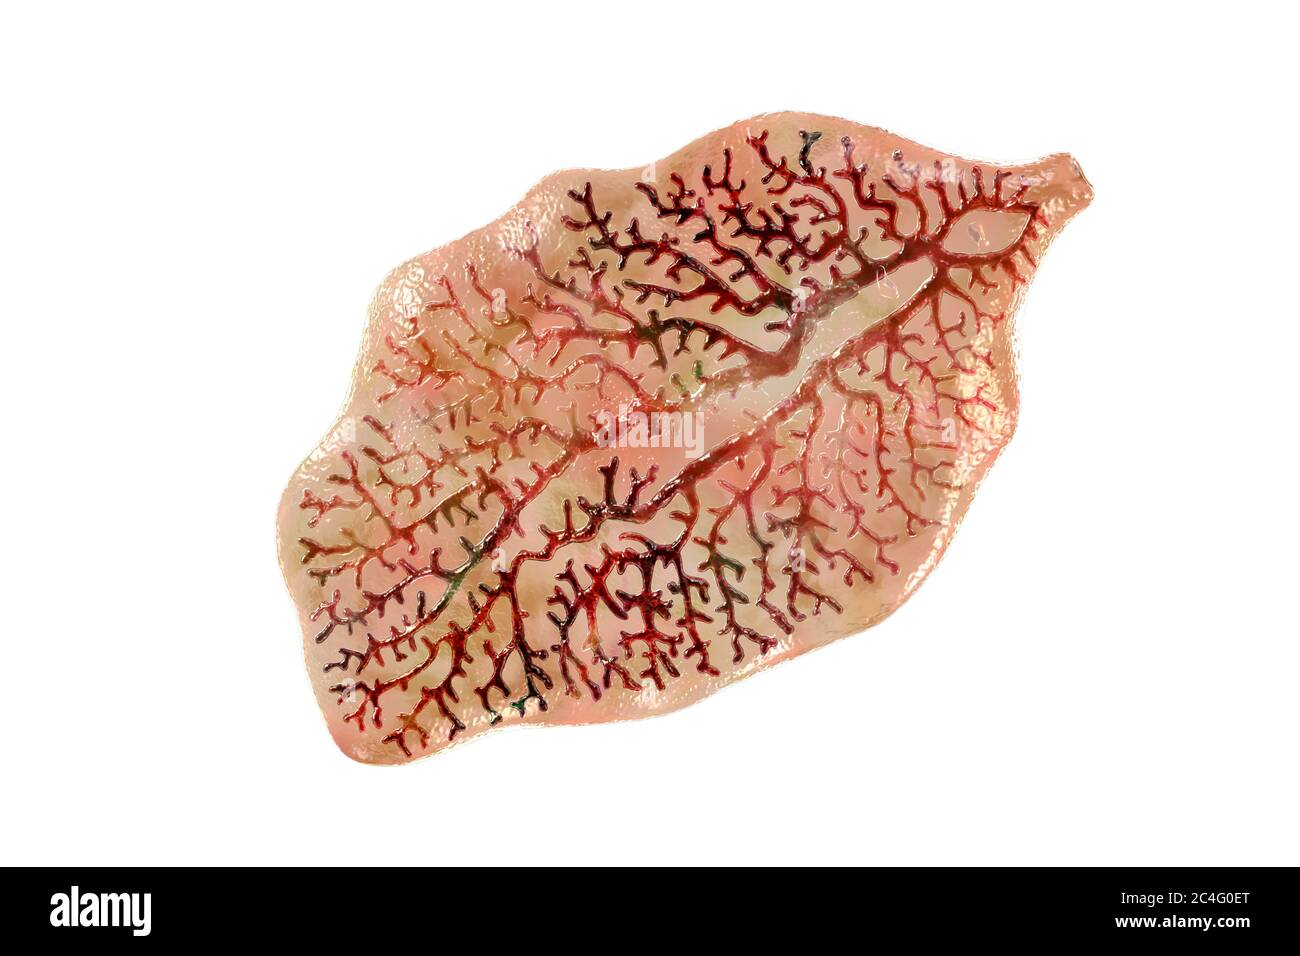 Liver fluke. Computer illustration of an adult liver fluke